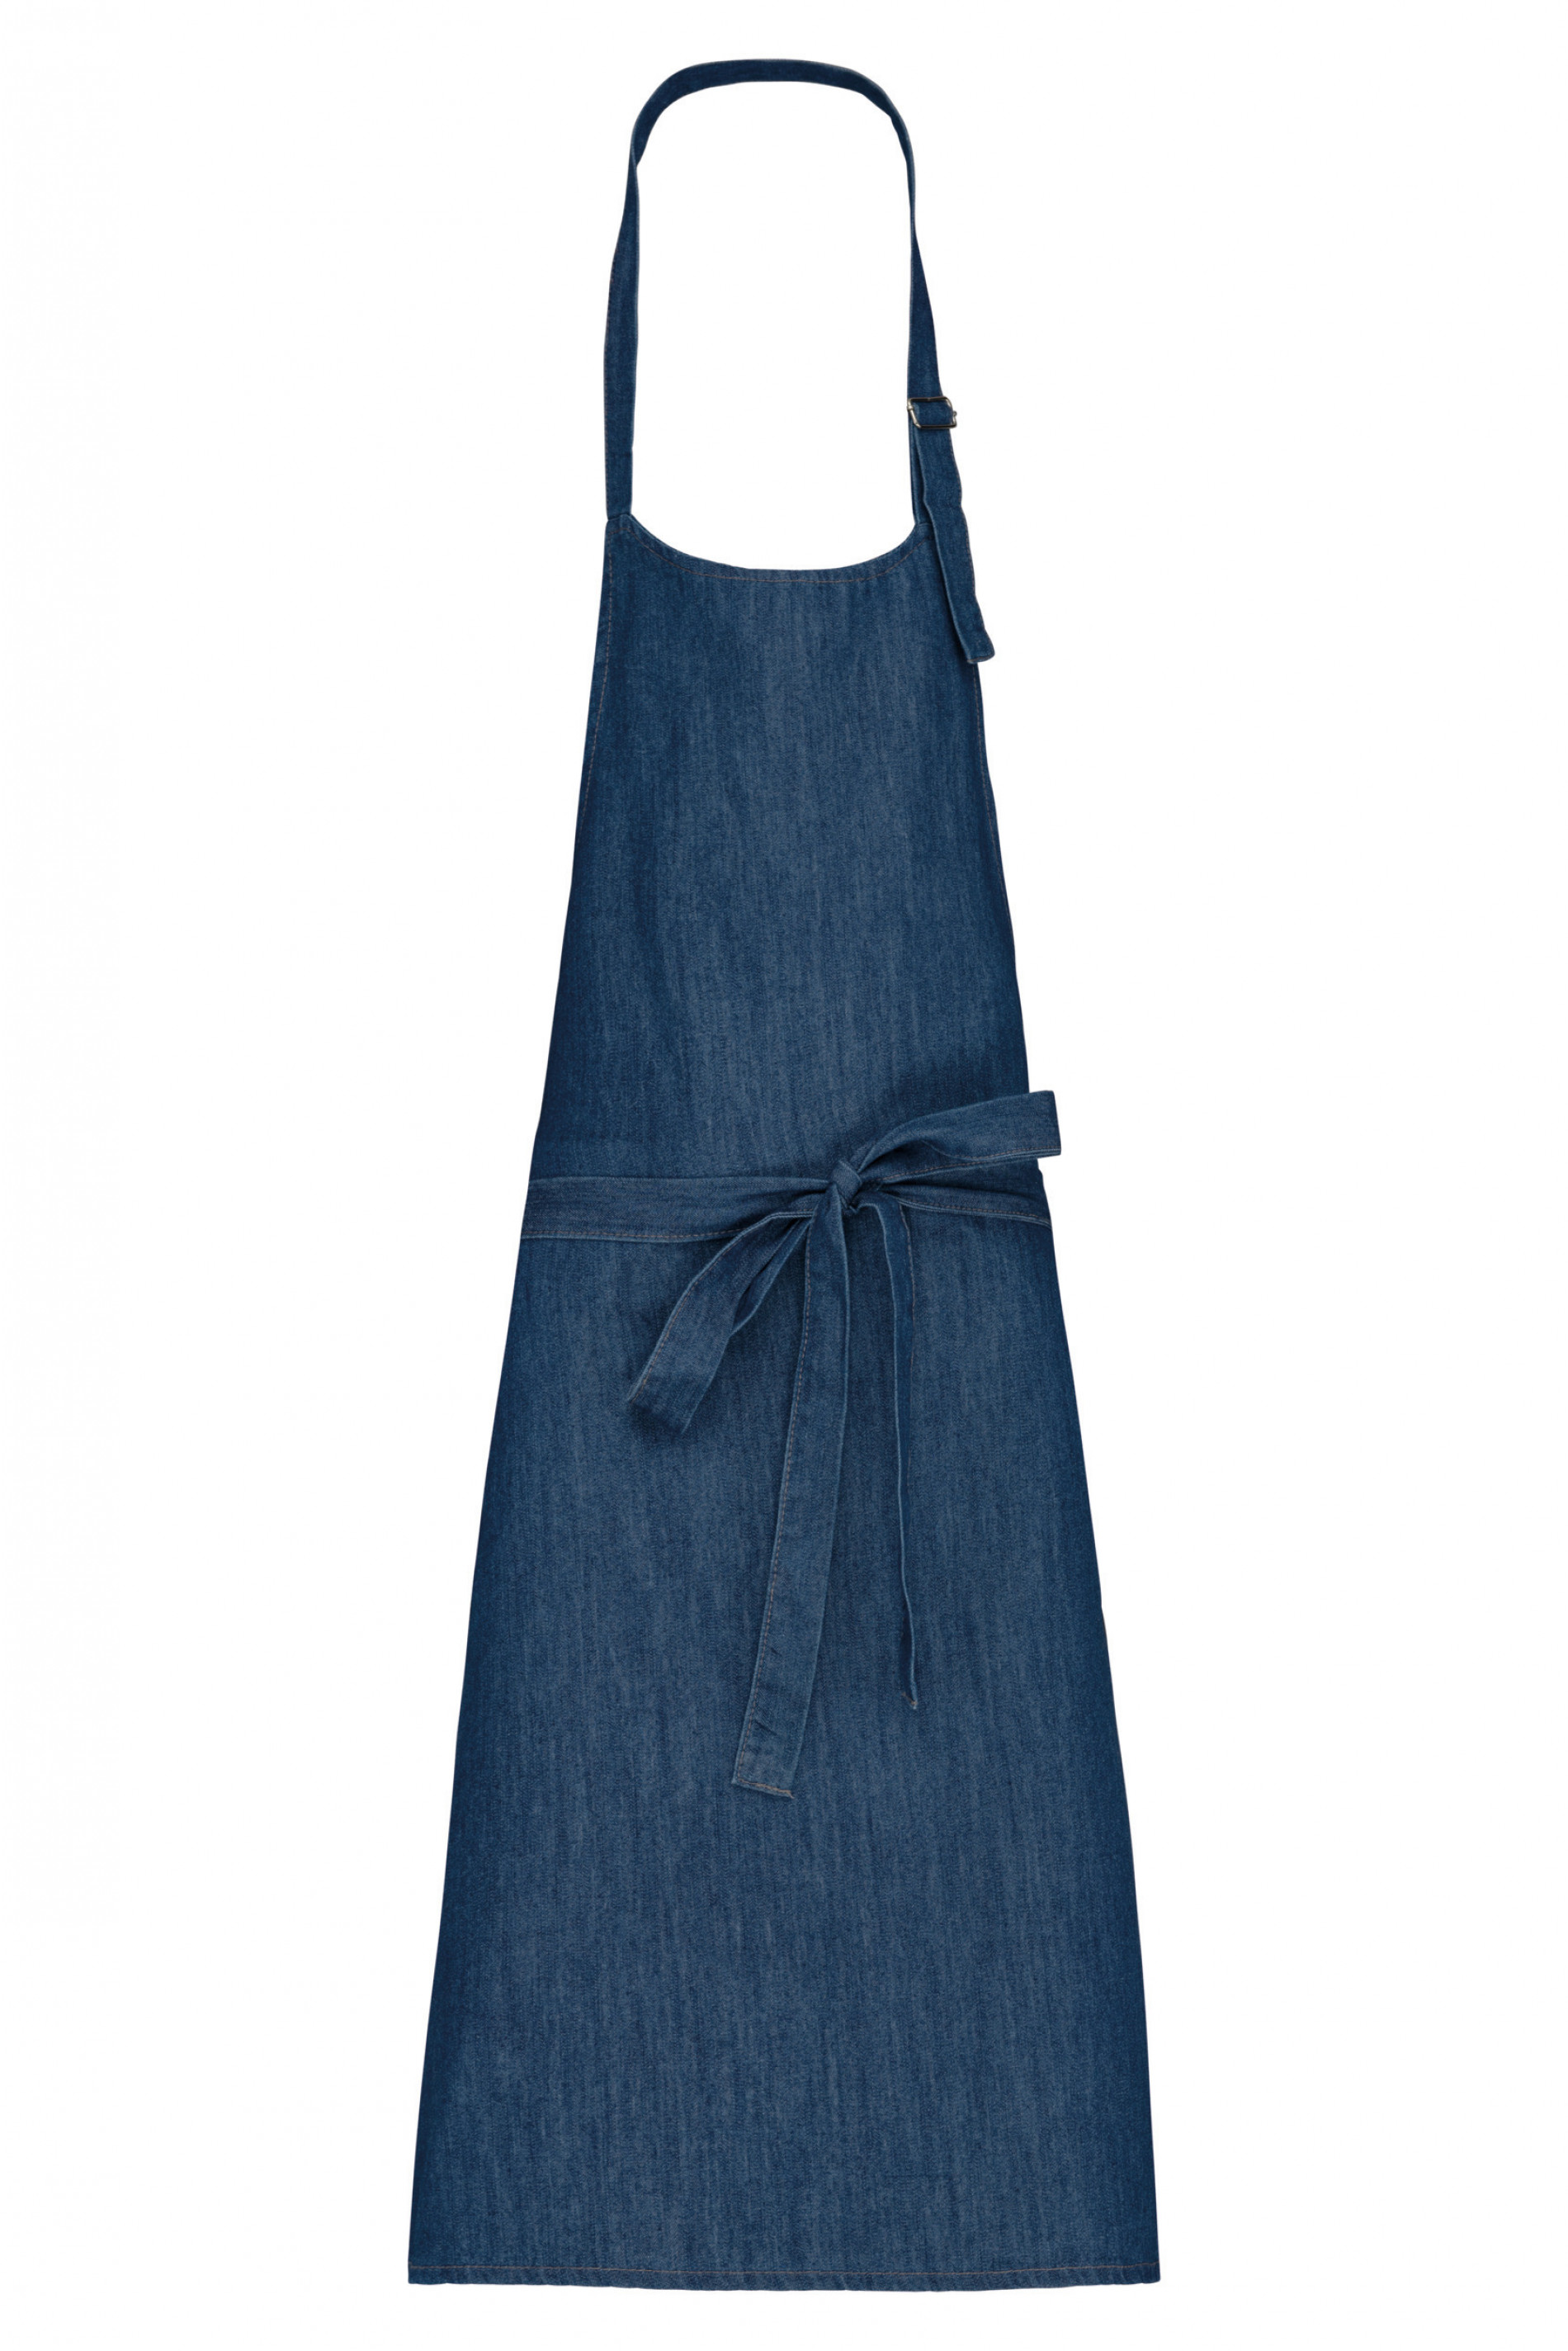 Denim jeans bib apron without pocket 90 x 76 cm Kariban® Denim One Size